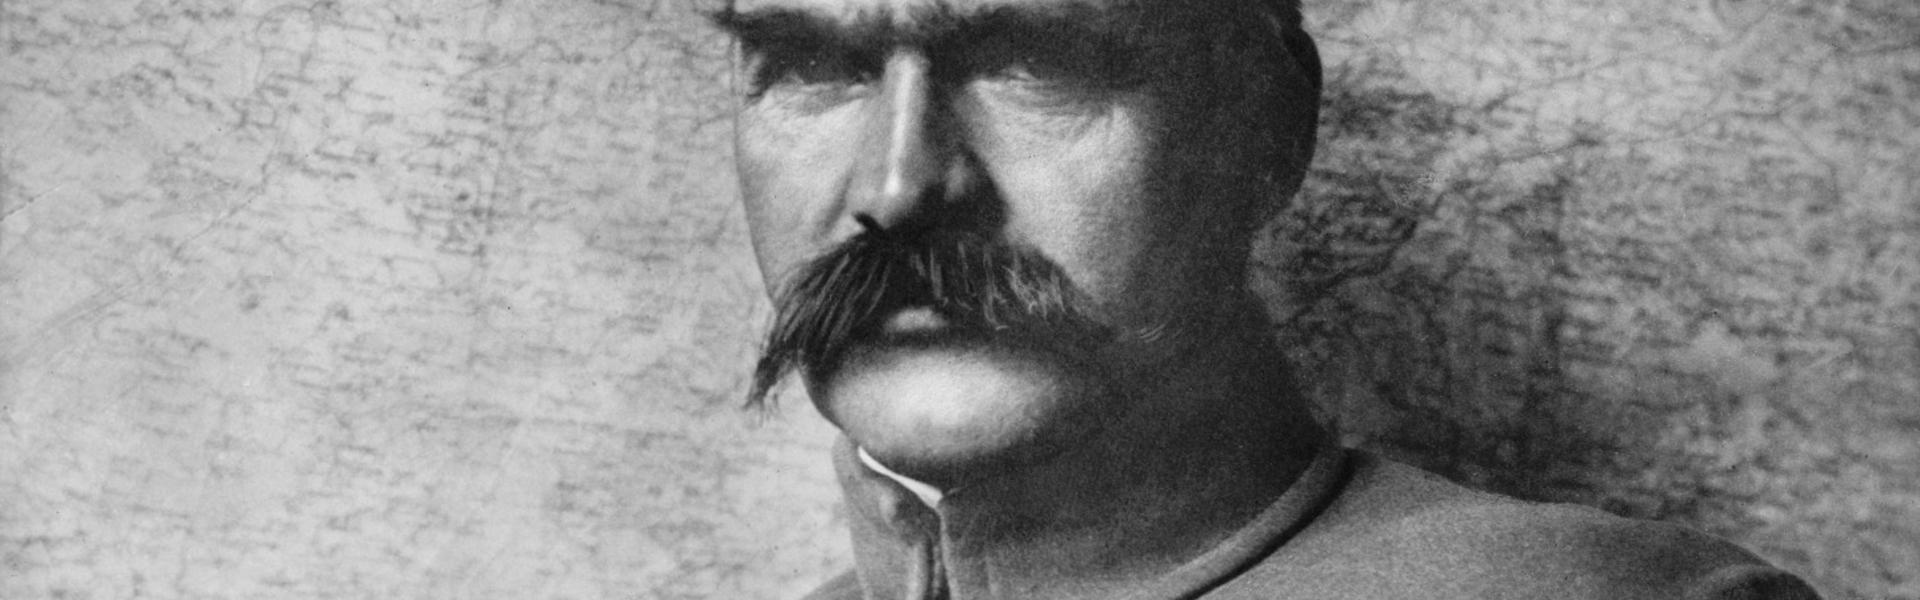 Portrait of Józef Piłsudski